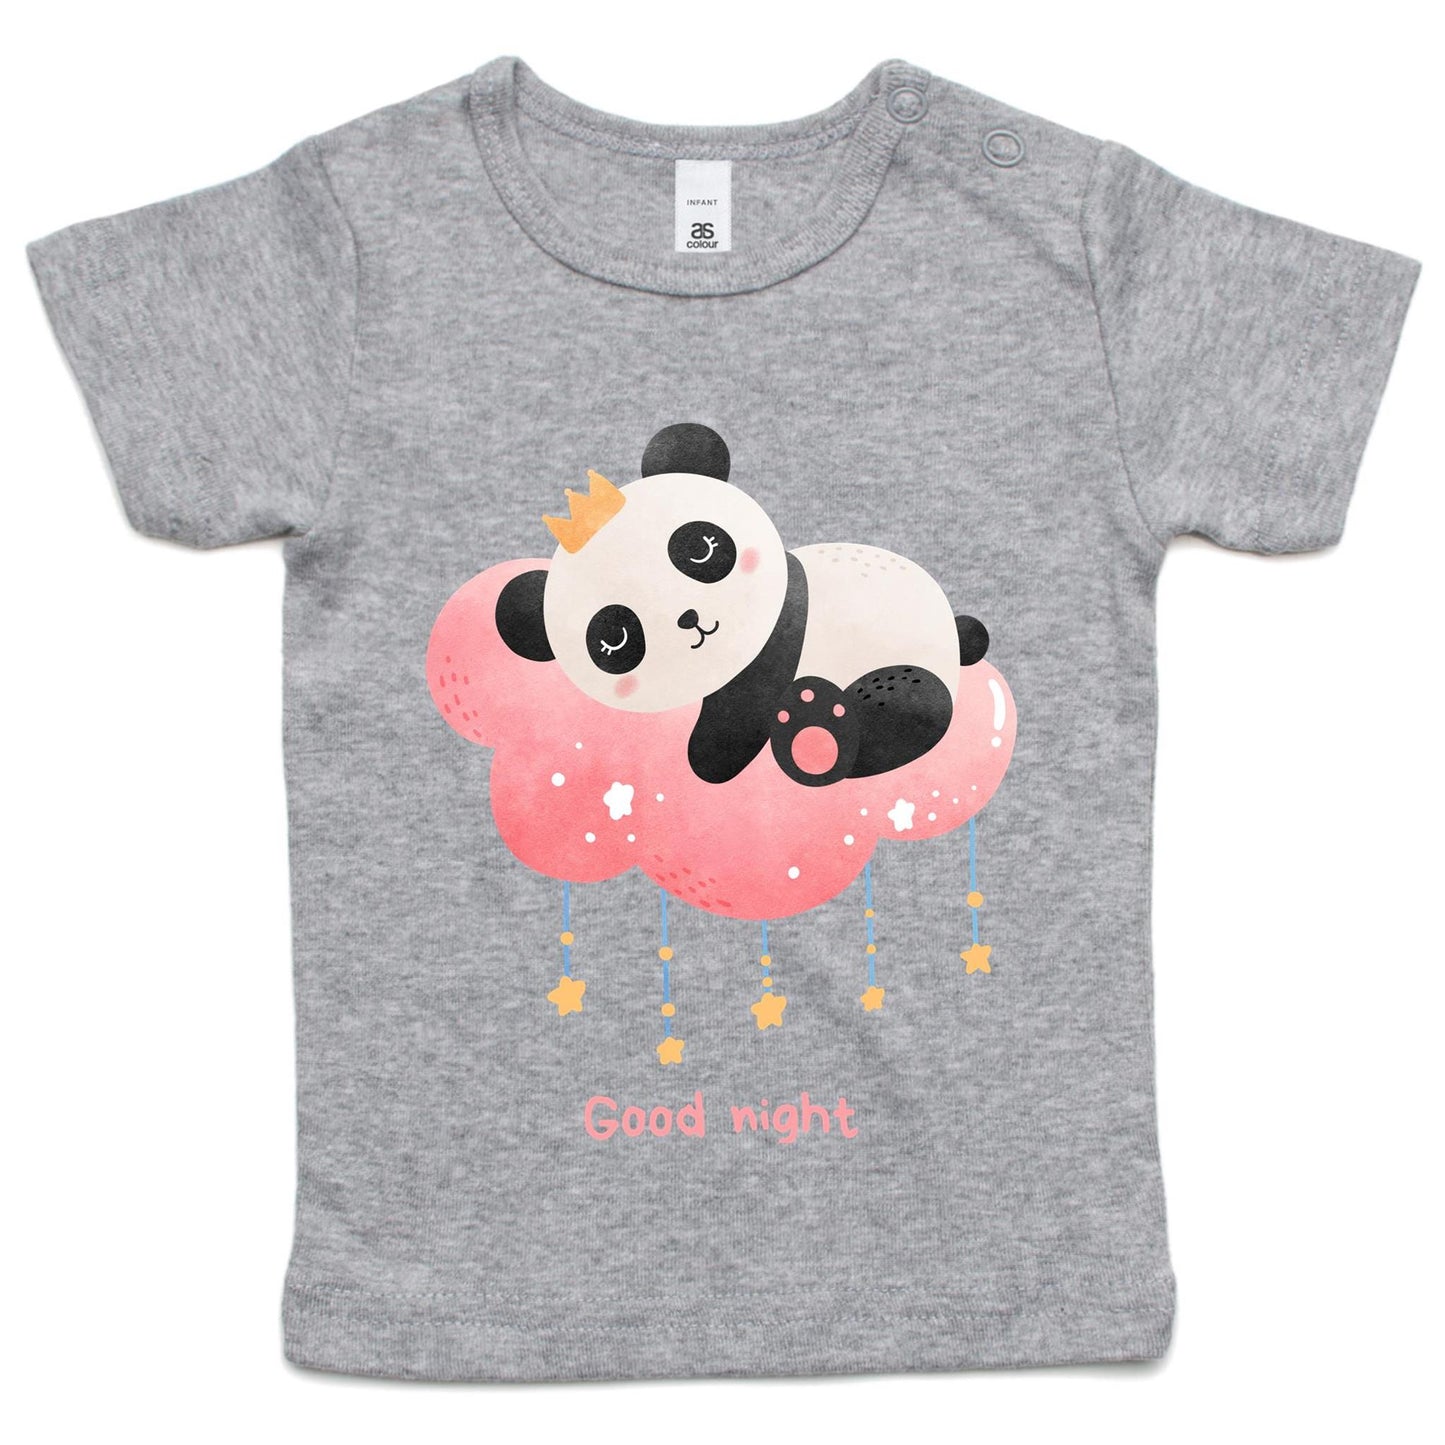 Good Night Panda - Baby T-shirt Grey Marle Baby T-shirt animal